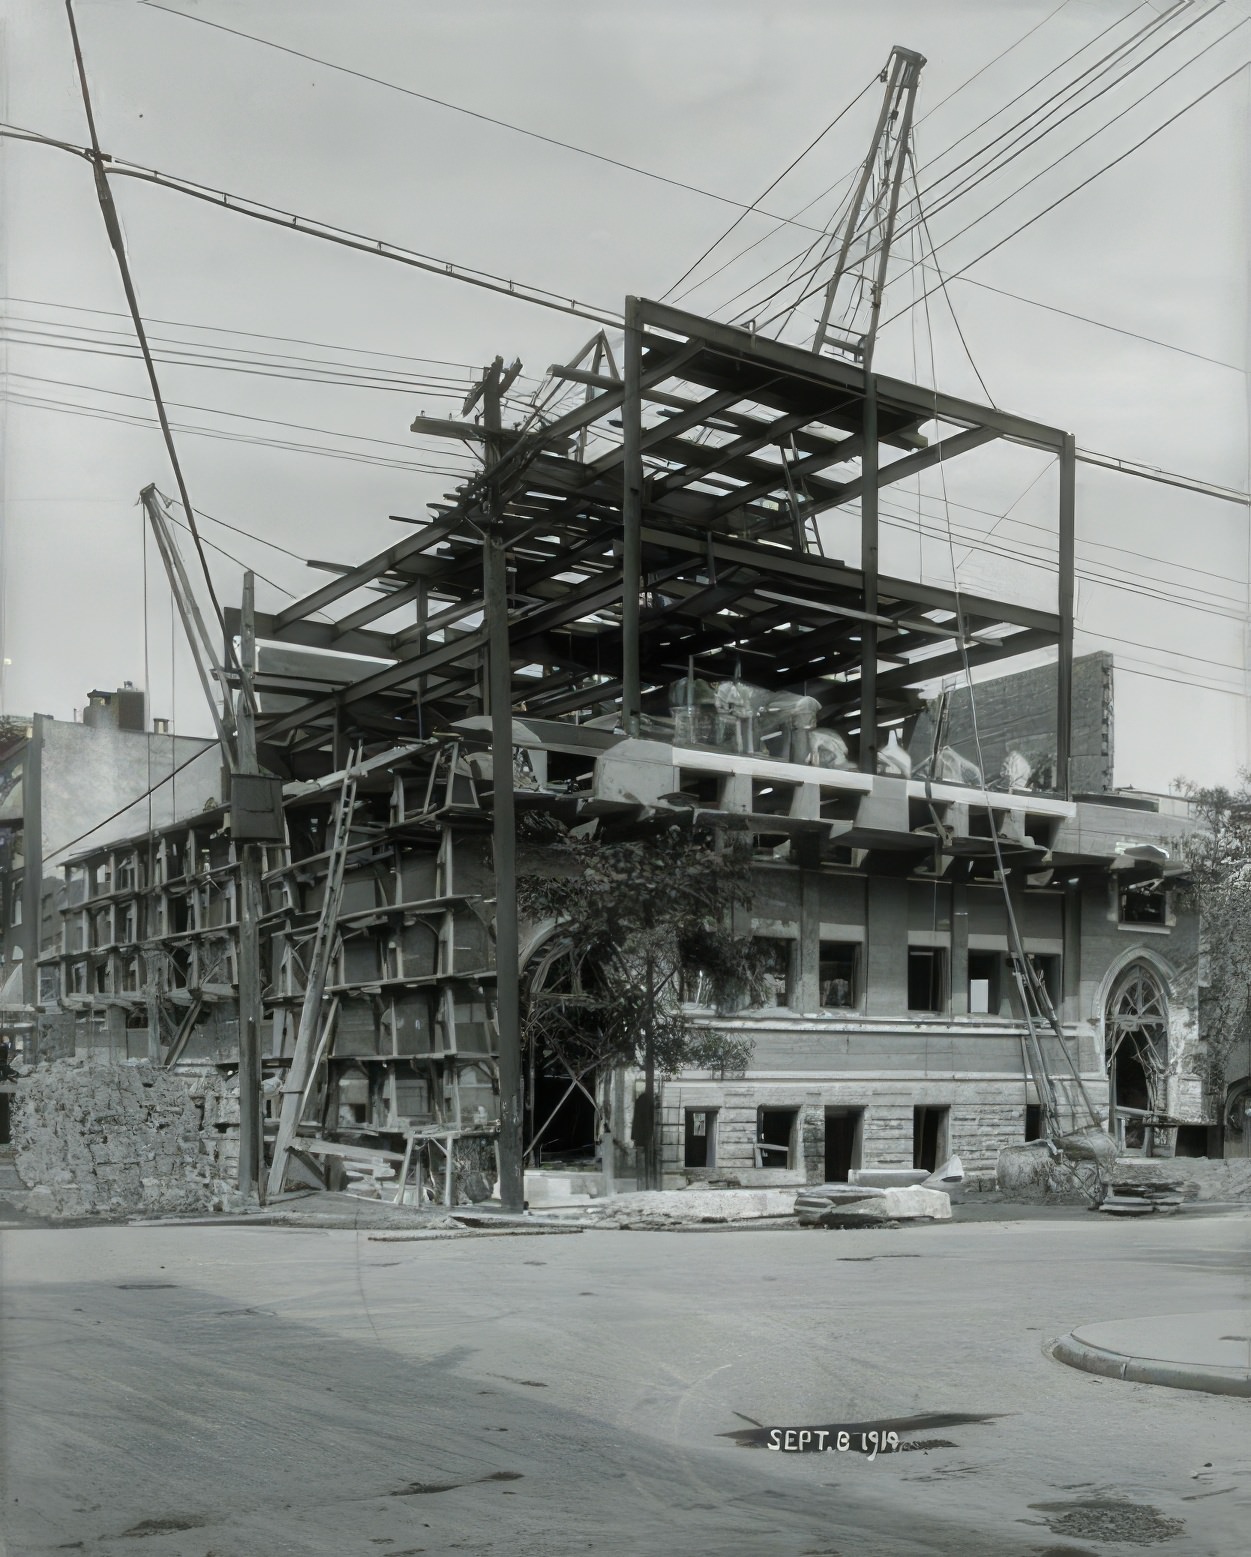 183Rd Street And Washington Avenue, Parochial School, Exterior Construction, September 1914.